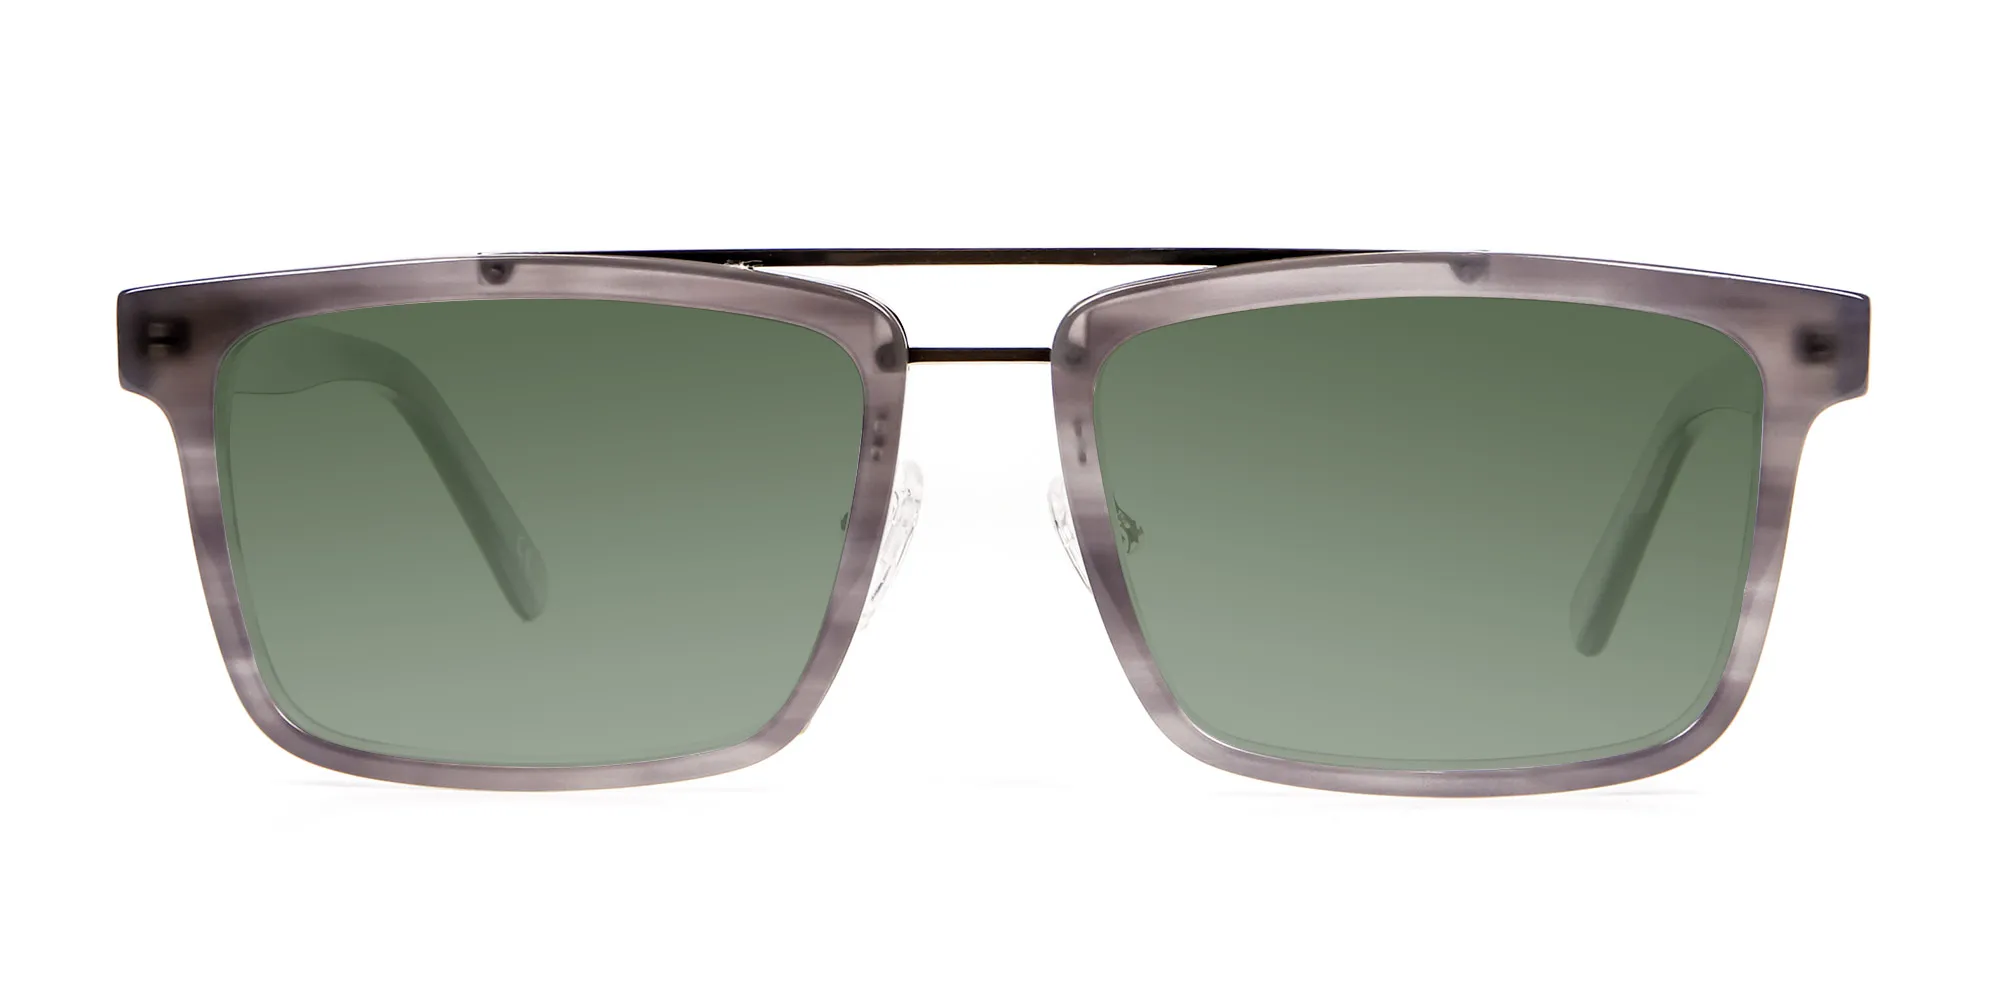 Unisex Dark Green Rectangular Sunglasses  Specscart-2